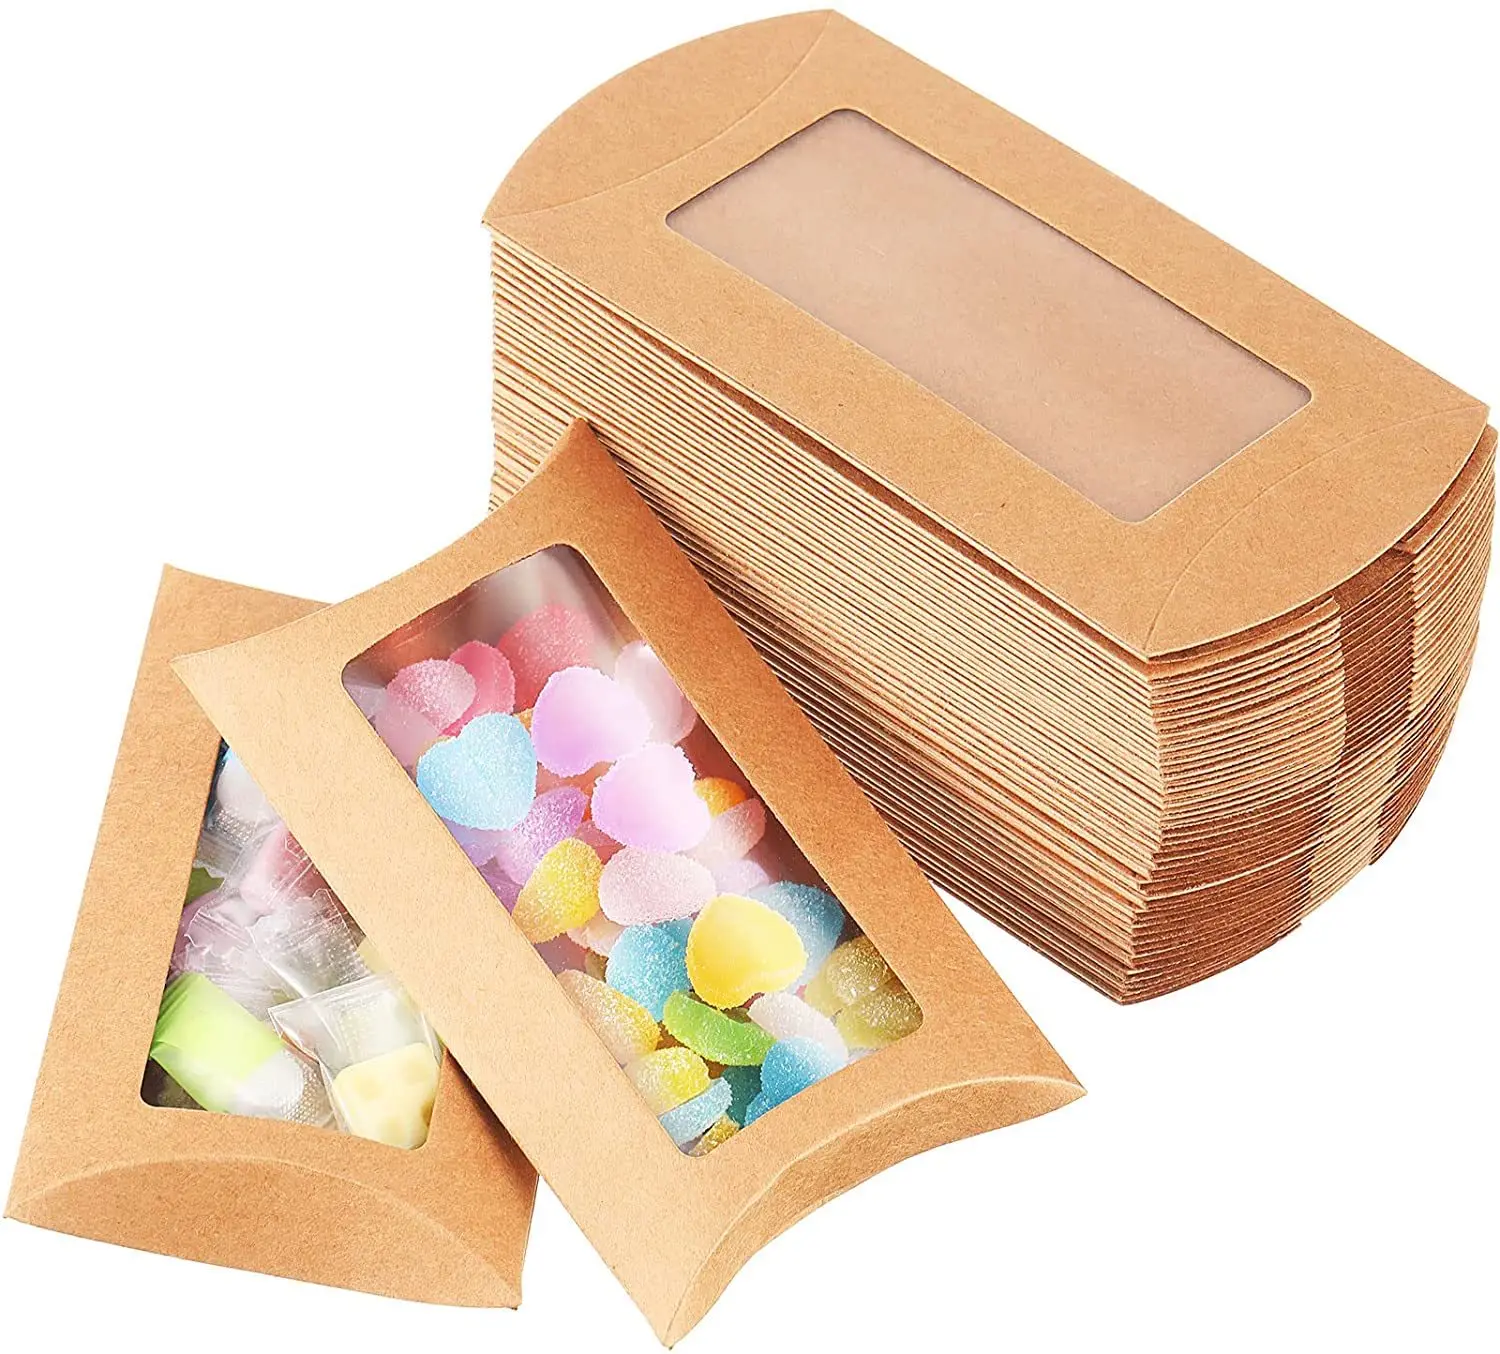 Cajas Regalo กล่องของขวัญกระดาษคราฟท์สีน้ำตาลทรงหมอนพับได้ขายส่งพร้อมหน้าต่างใส